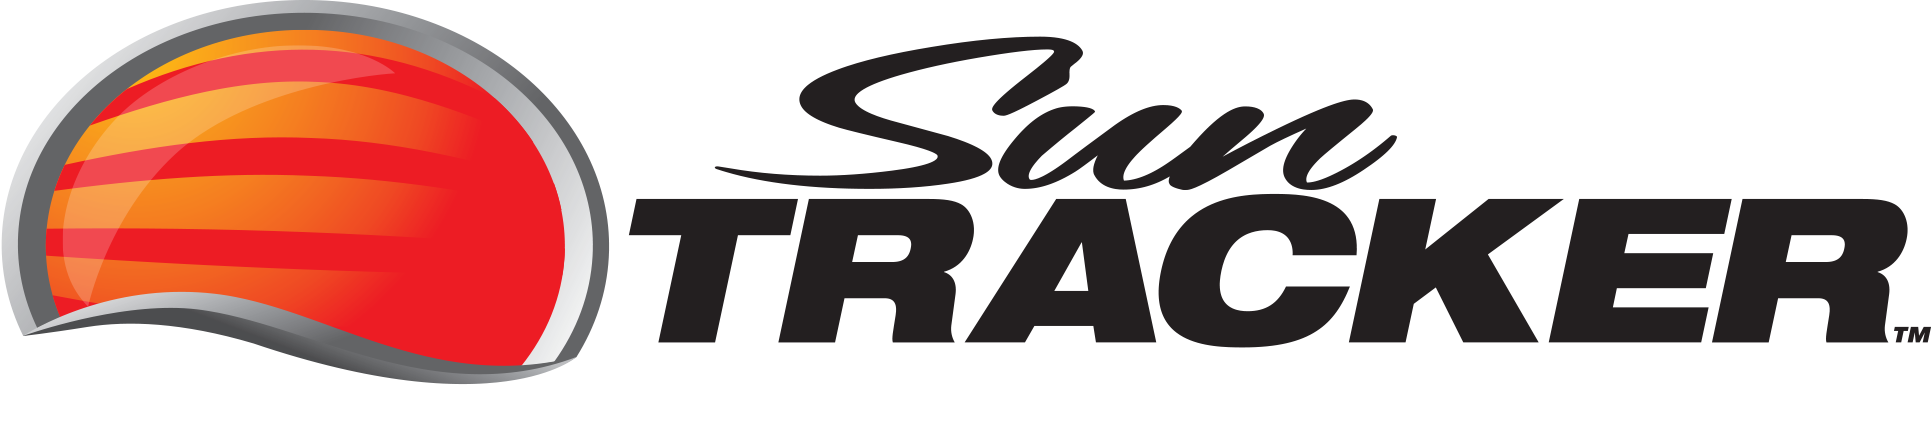 Logo Sun Tracker bateaux pontons